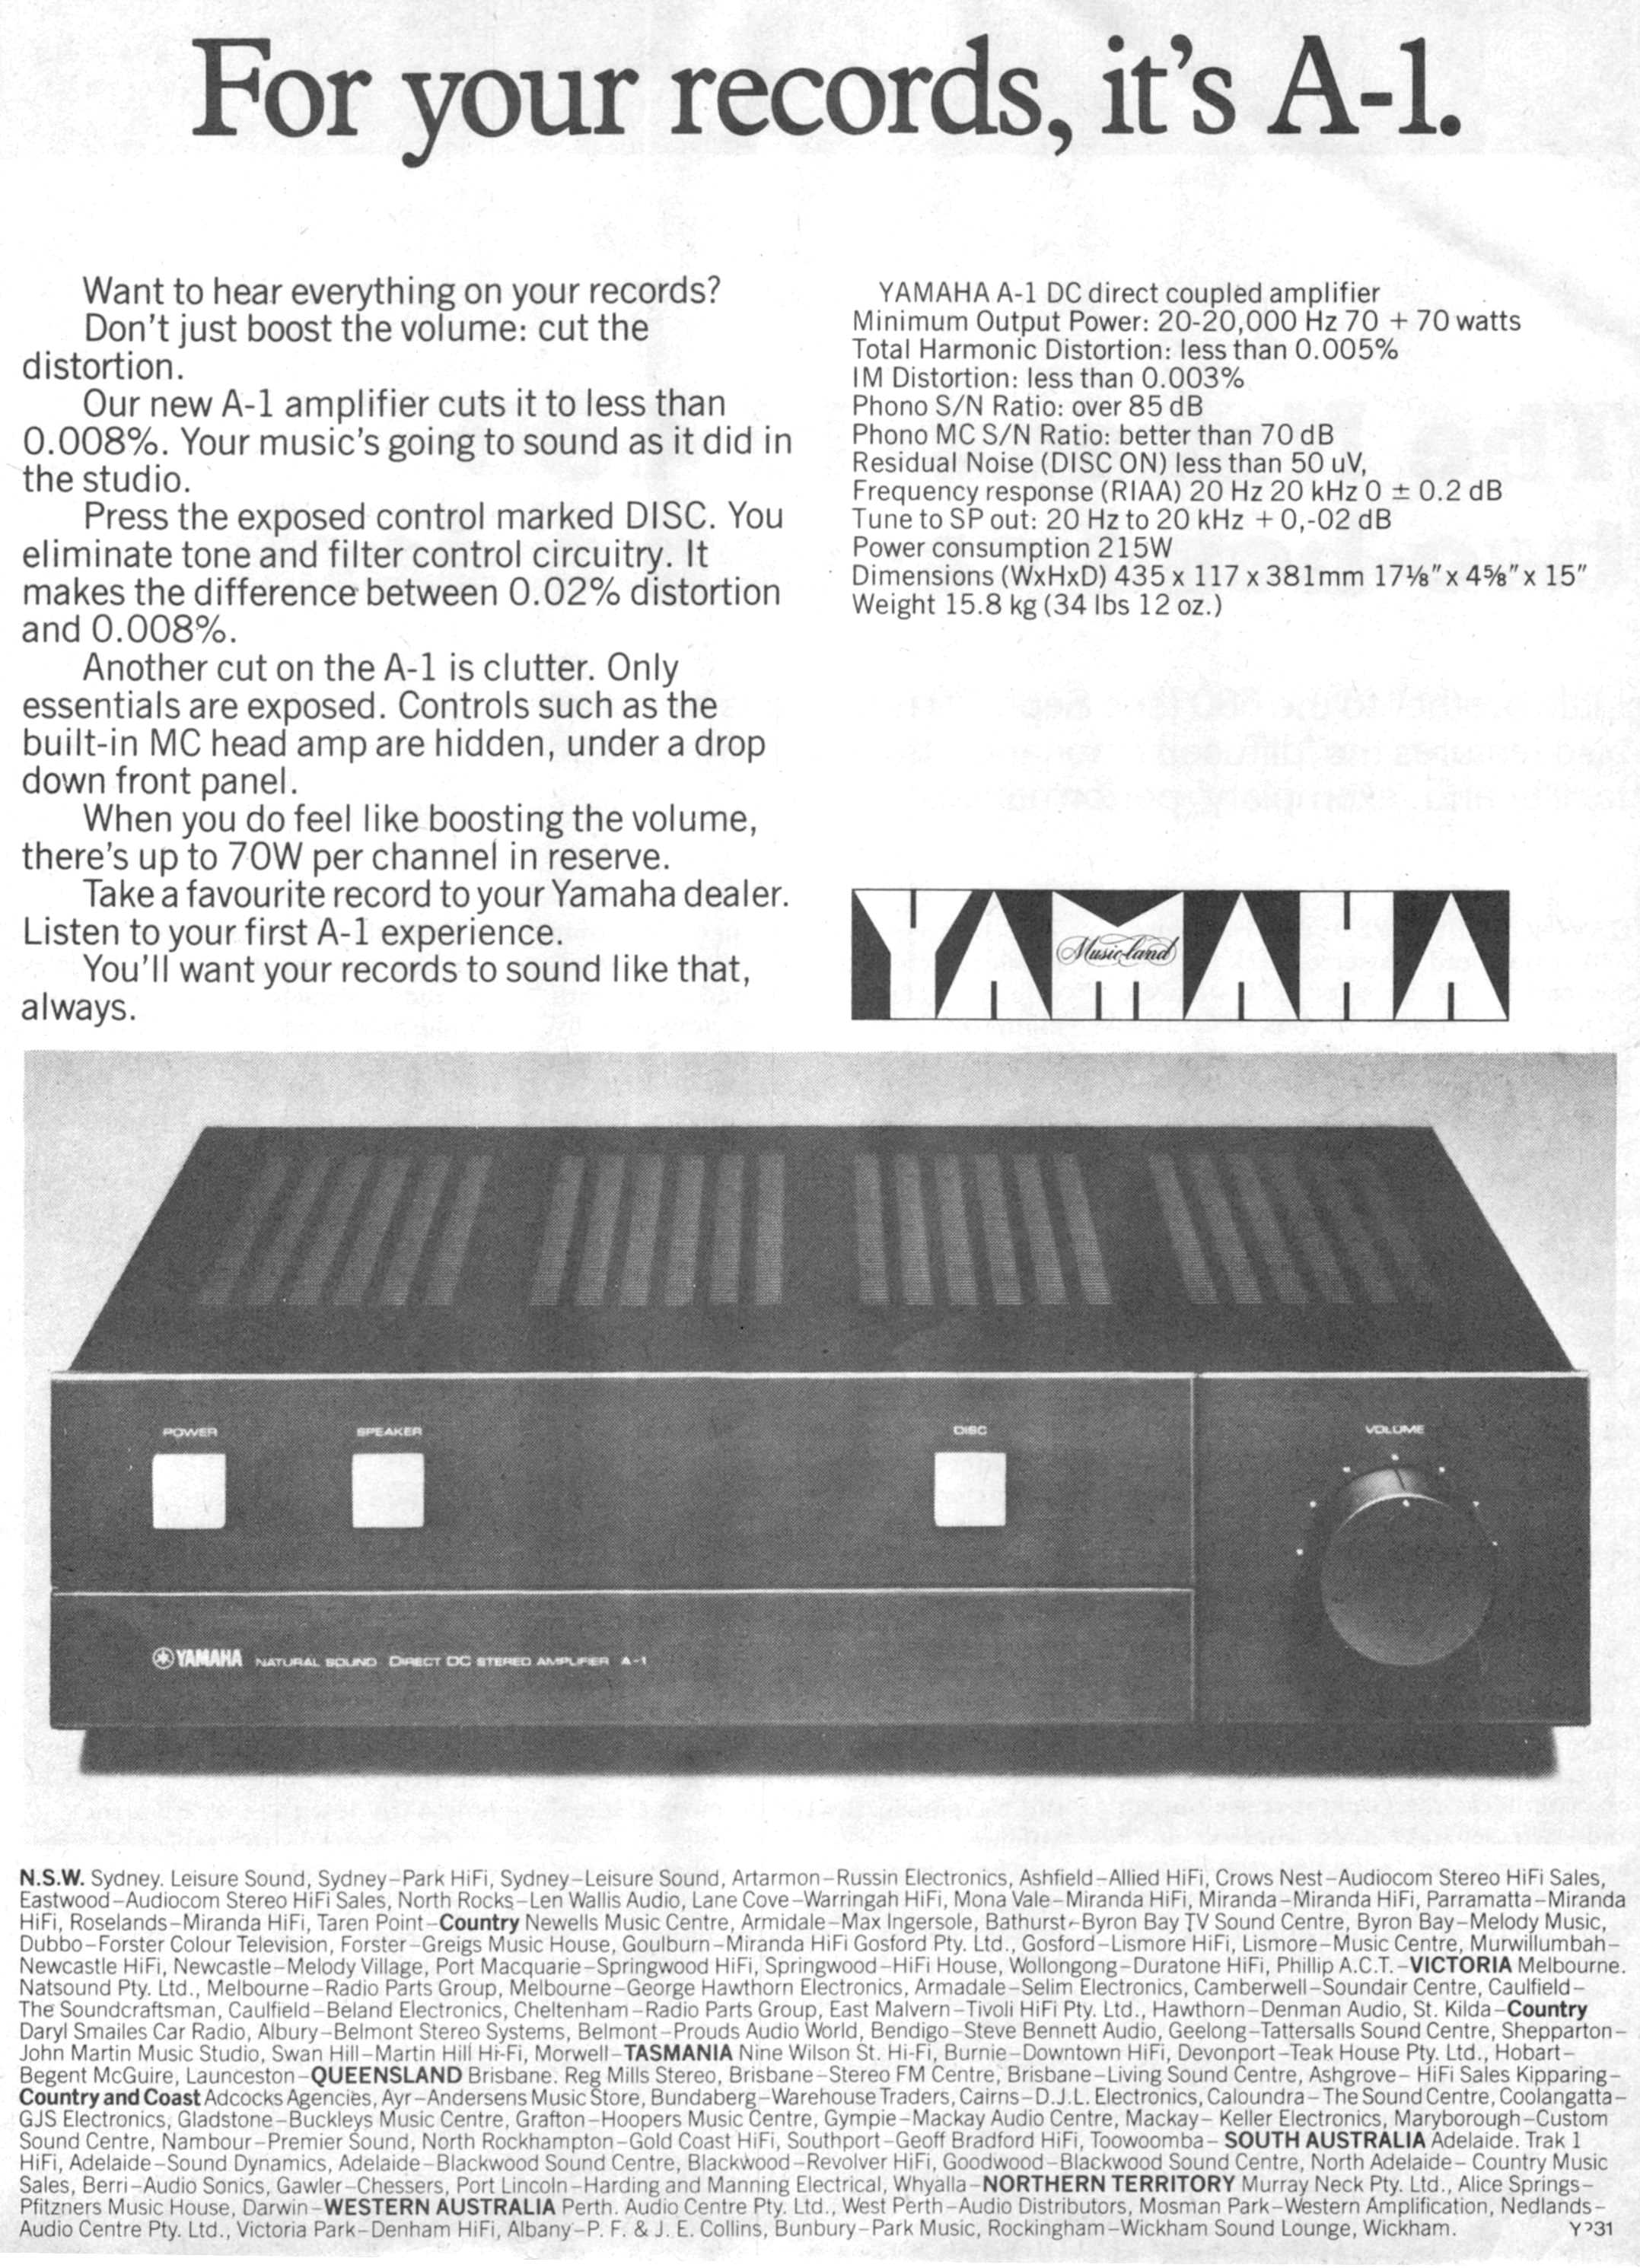 Yamaha 1980 25.jpg